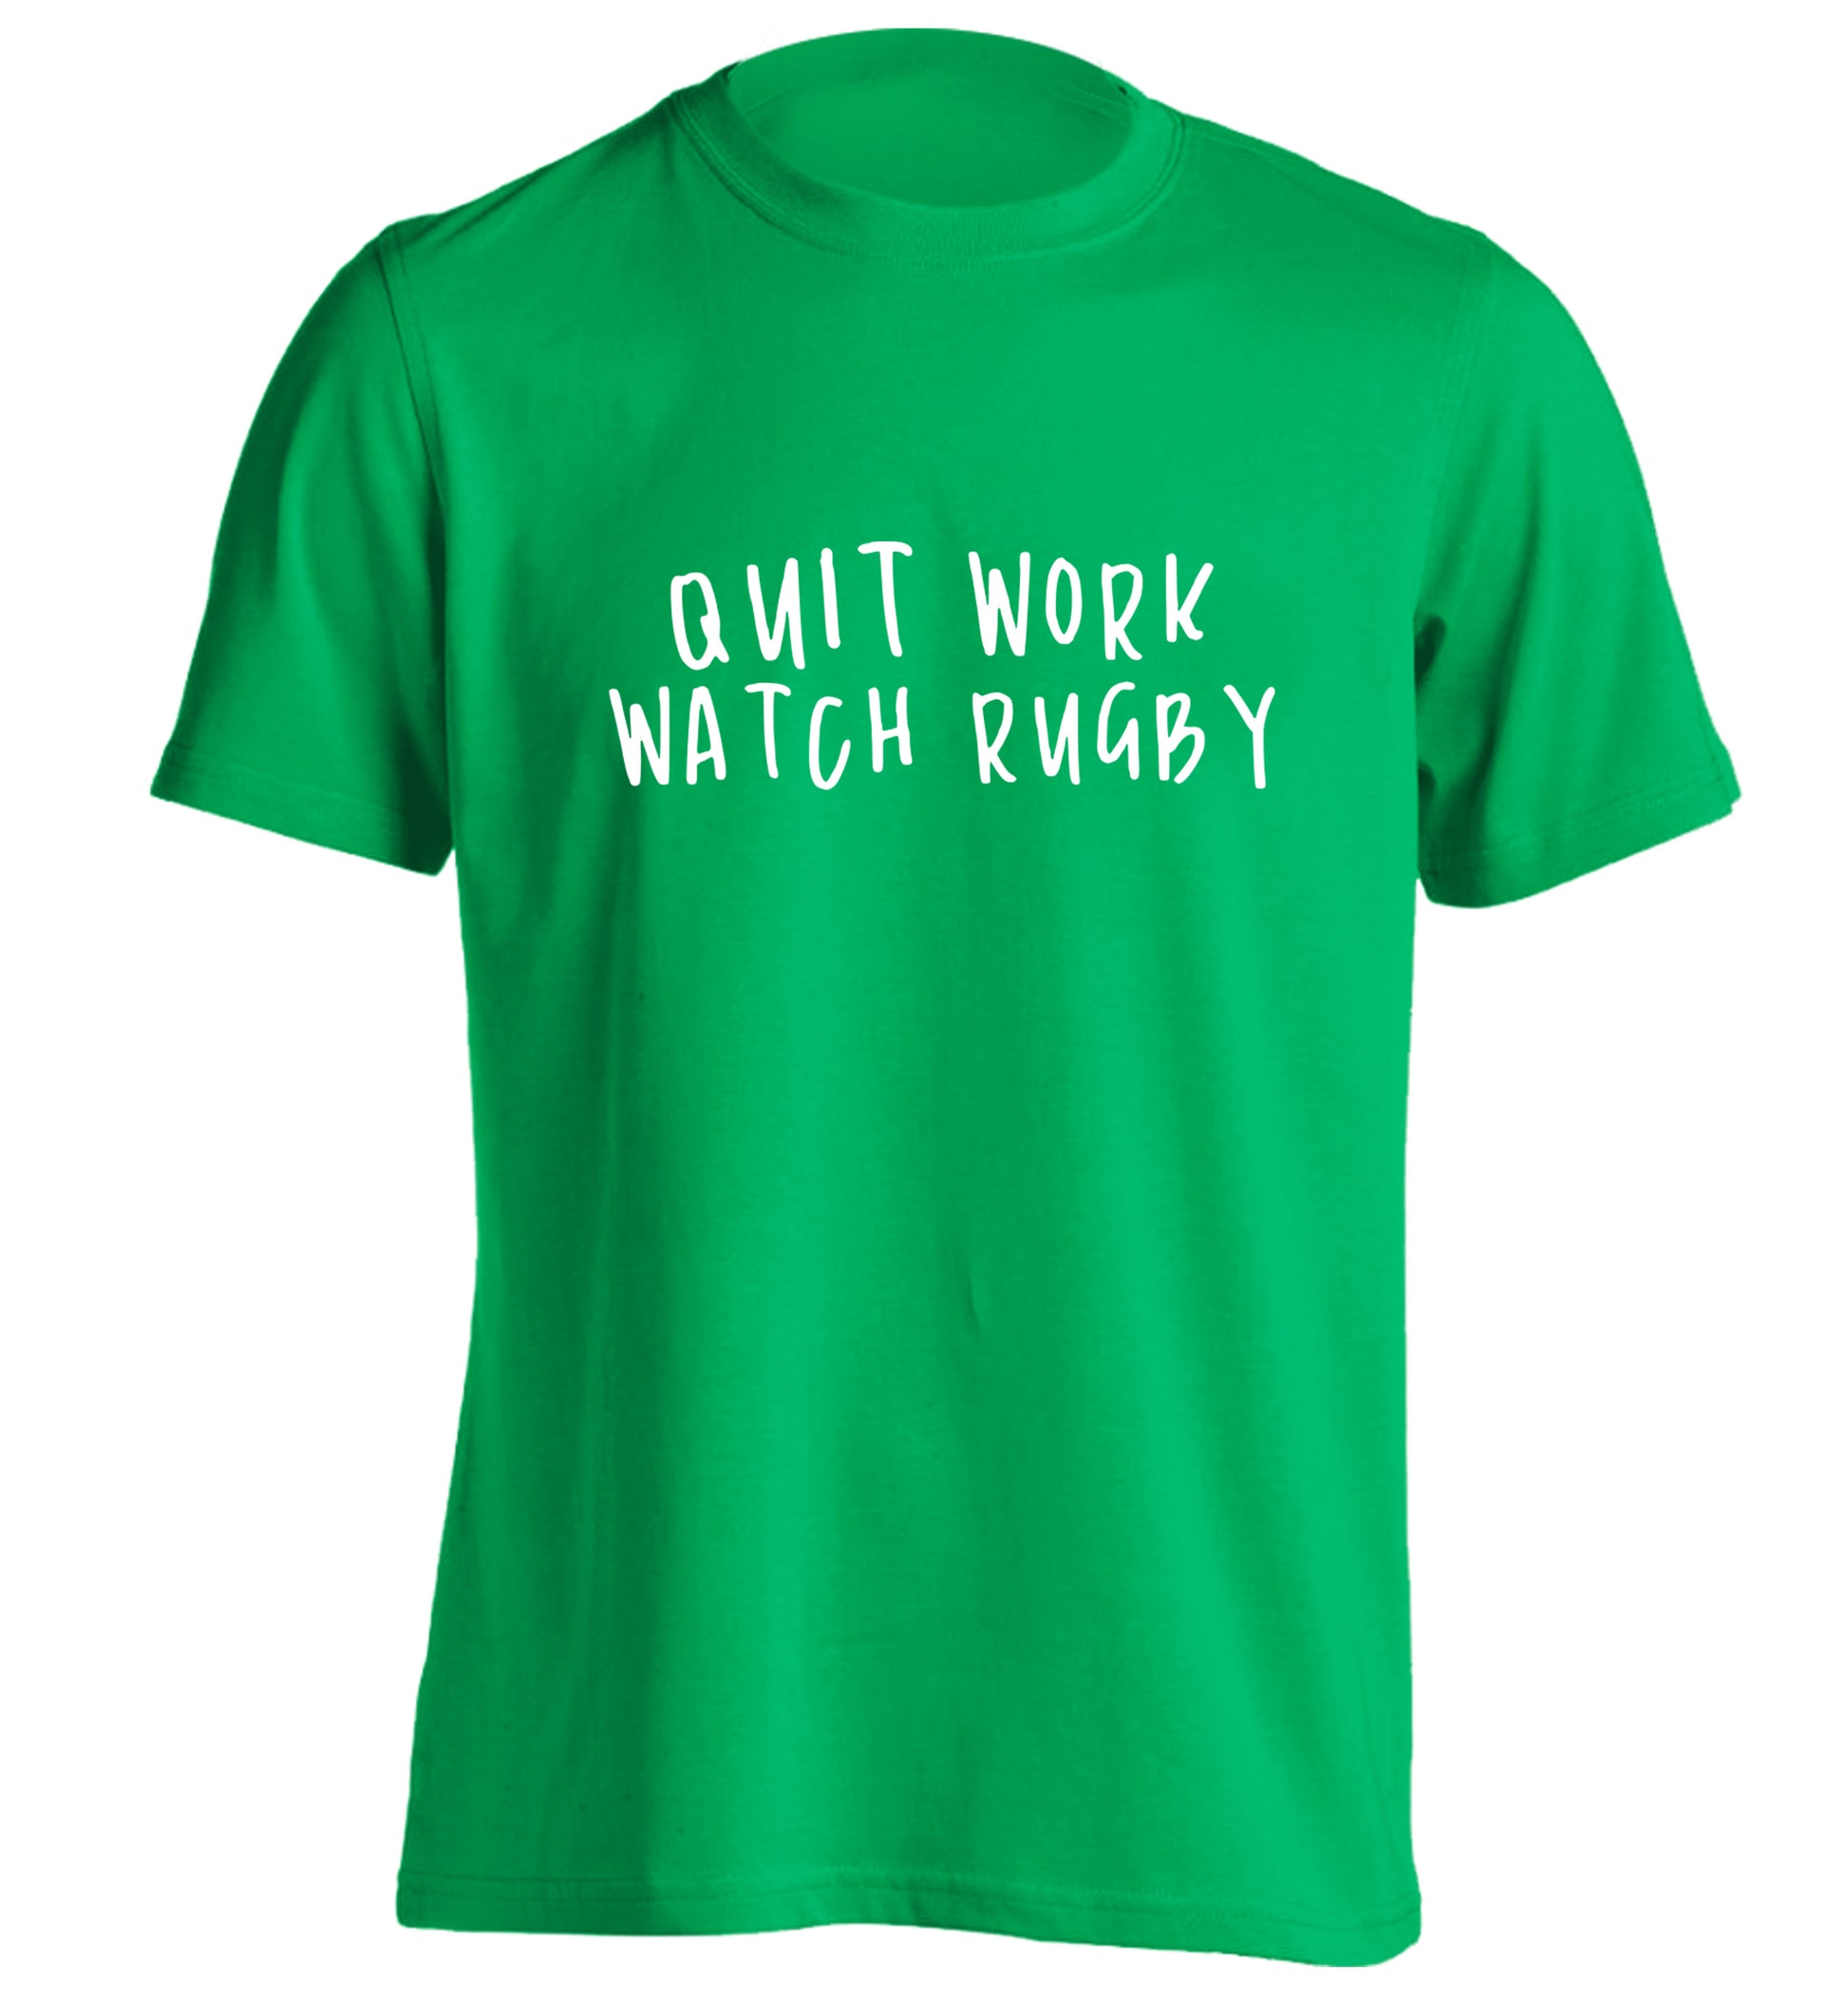 Quit work watch rugby adults unisex green Tshirt 2XL